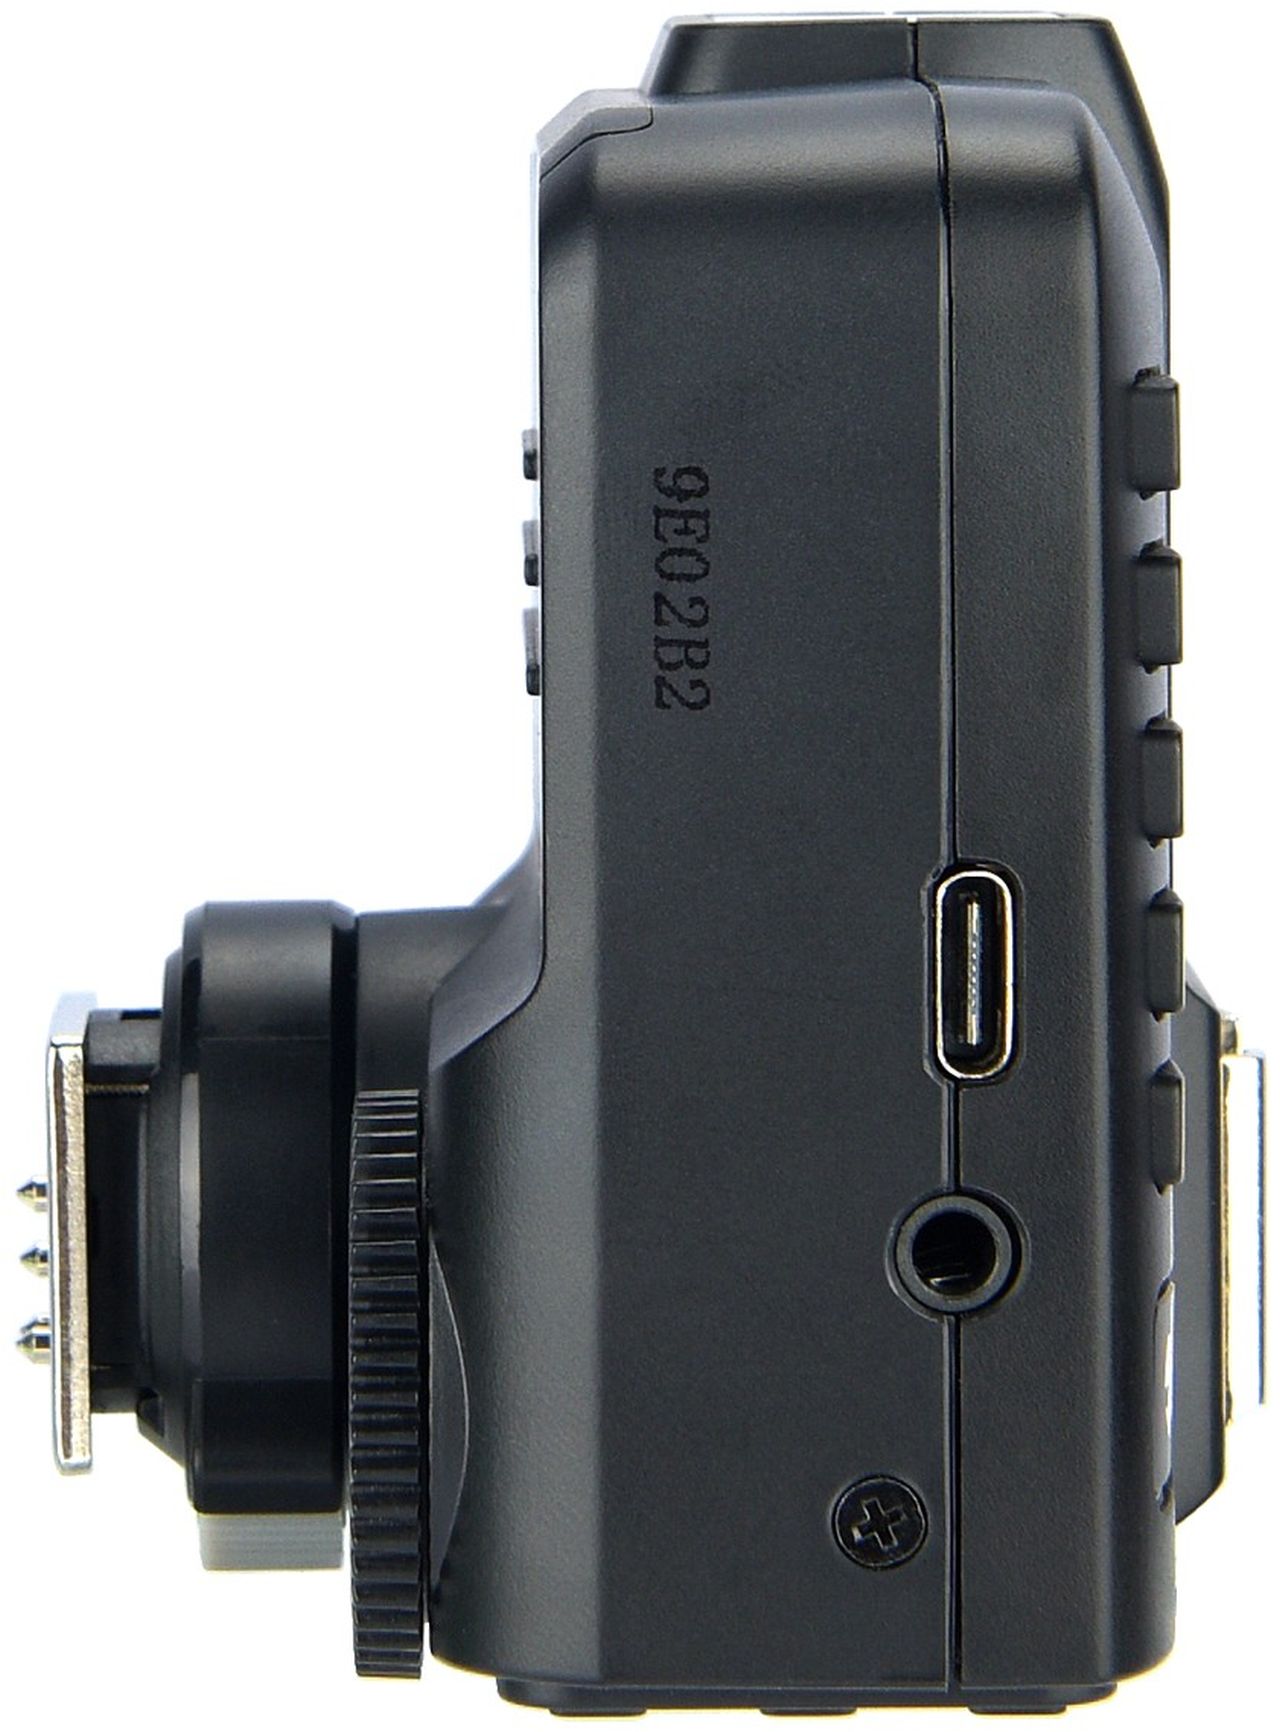 Godox X2T-C transmitter for Canon - Foto Erhardt